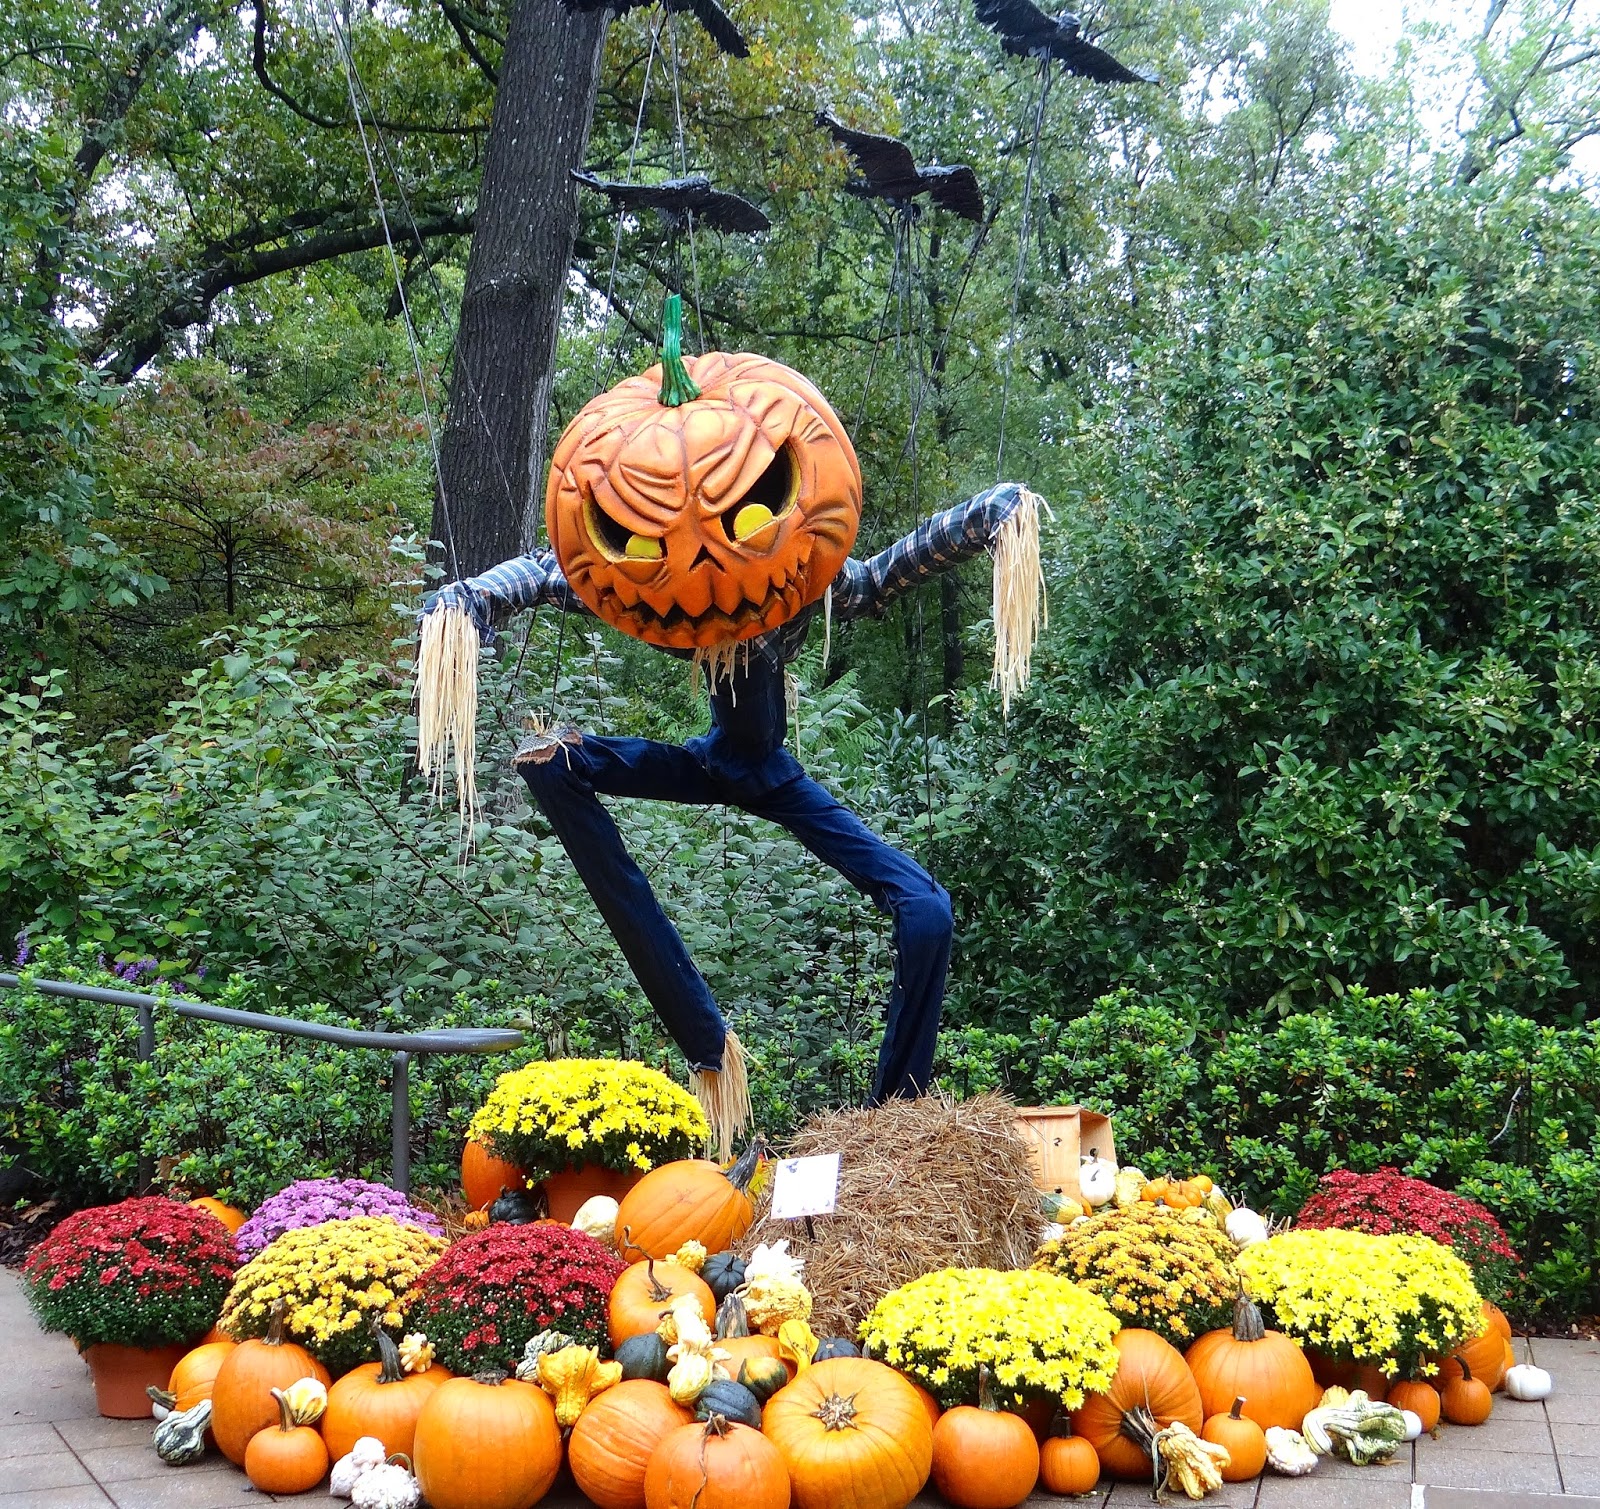 Phillip S Natural World 1 0 2 Halloween Scarecrows In The Garden